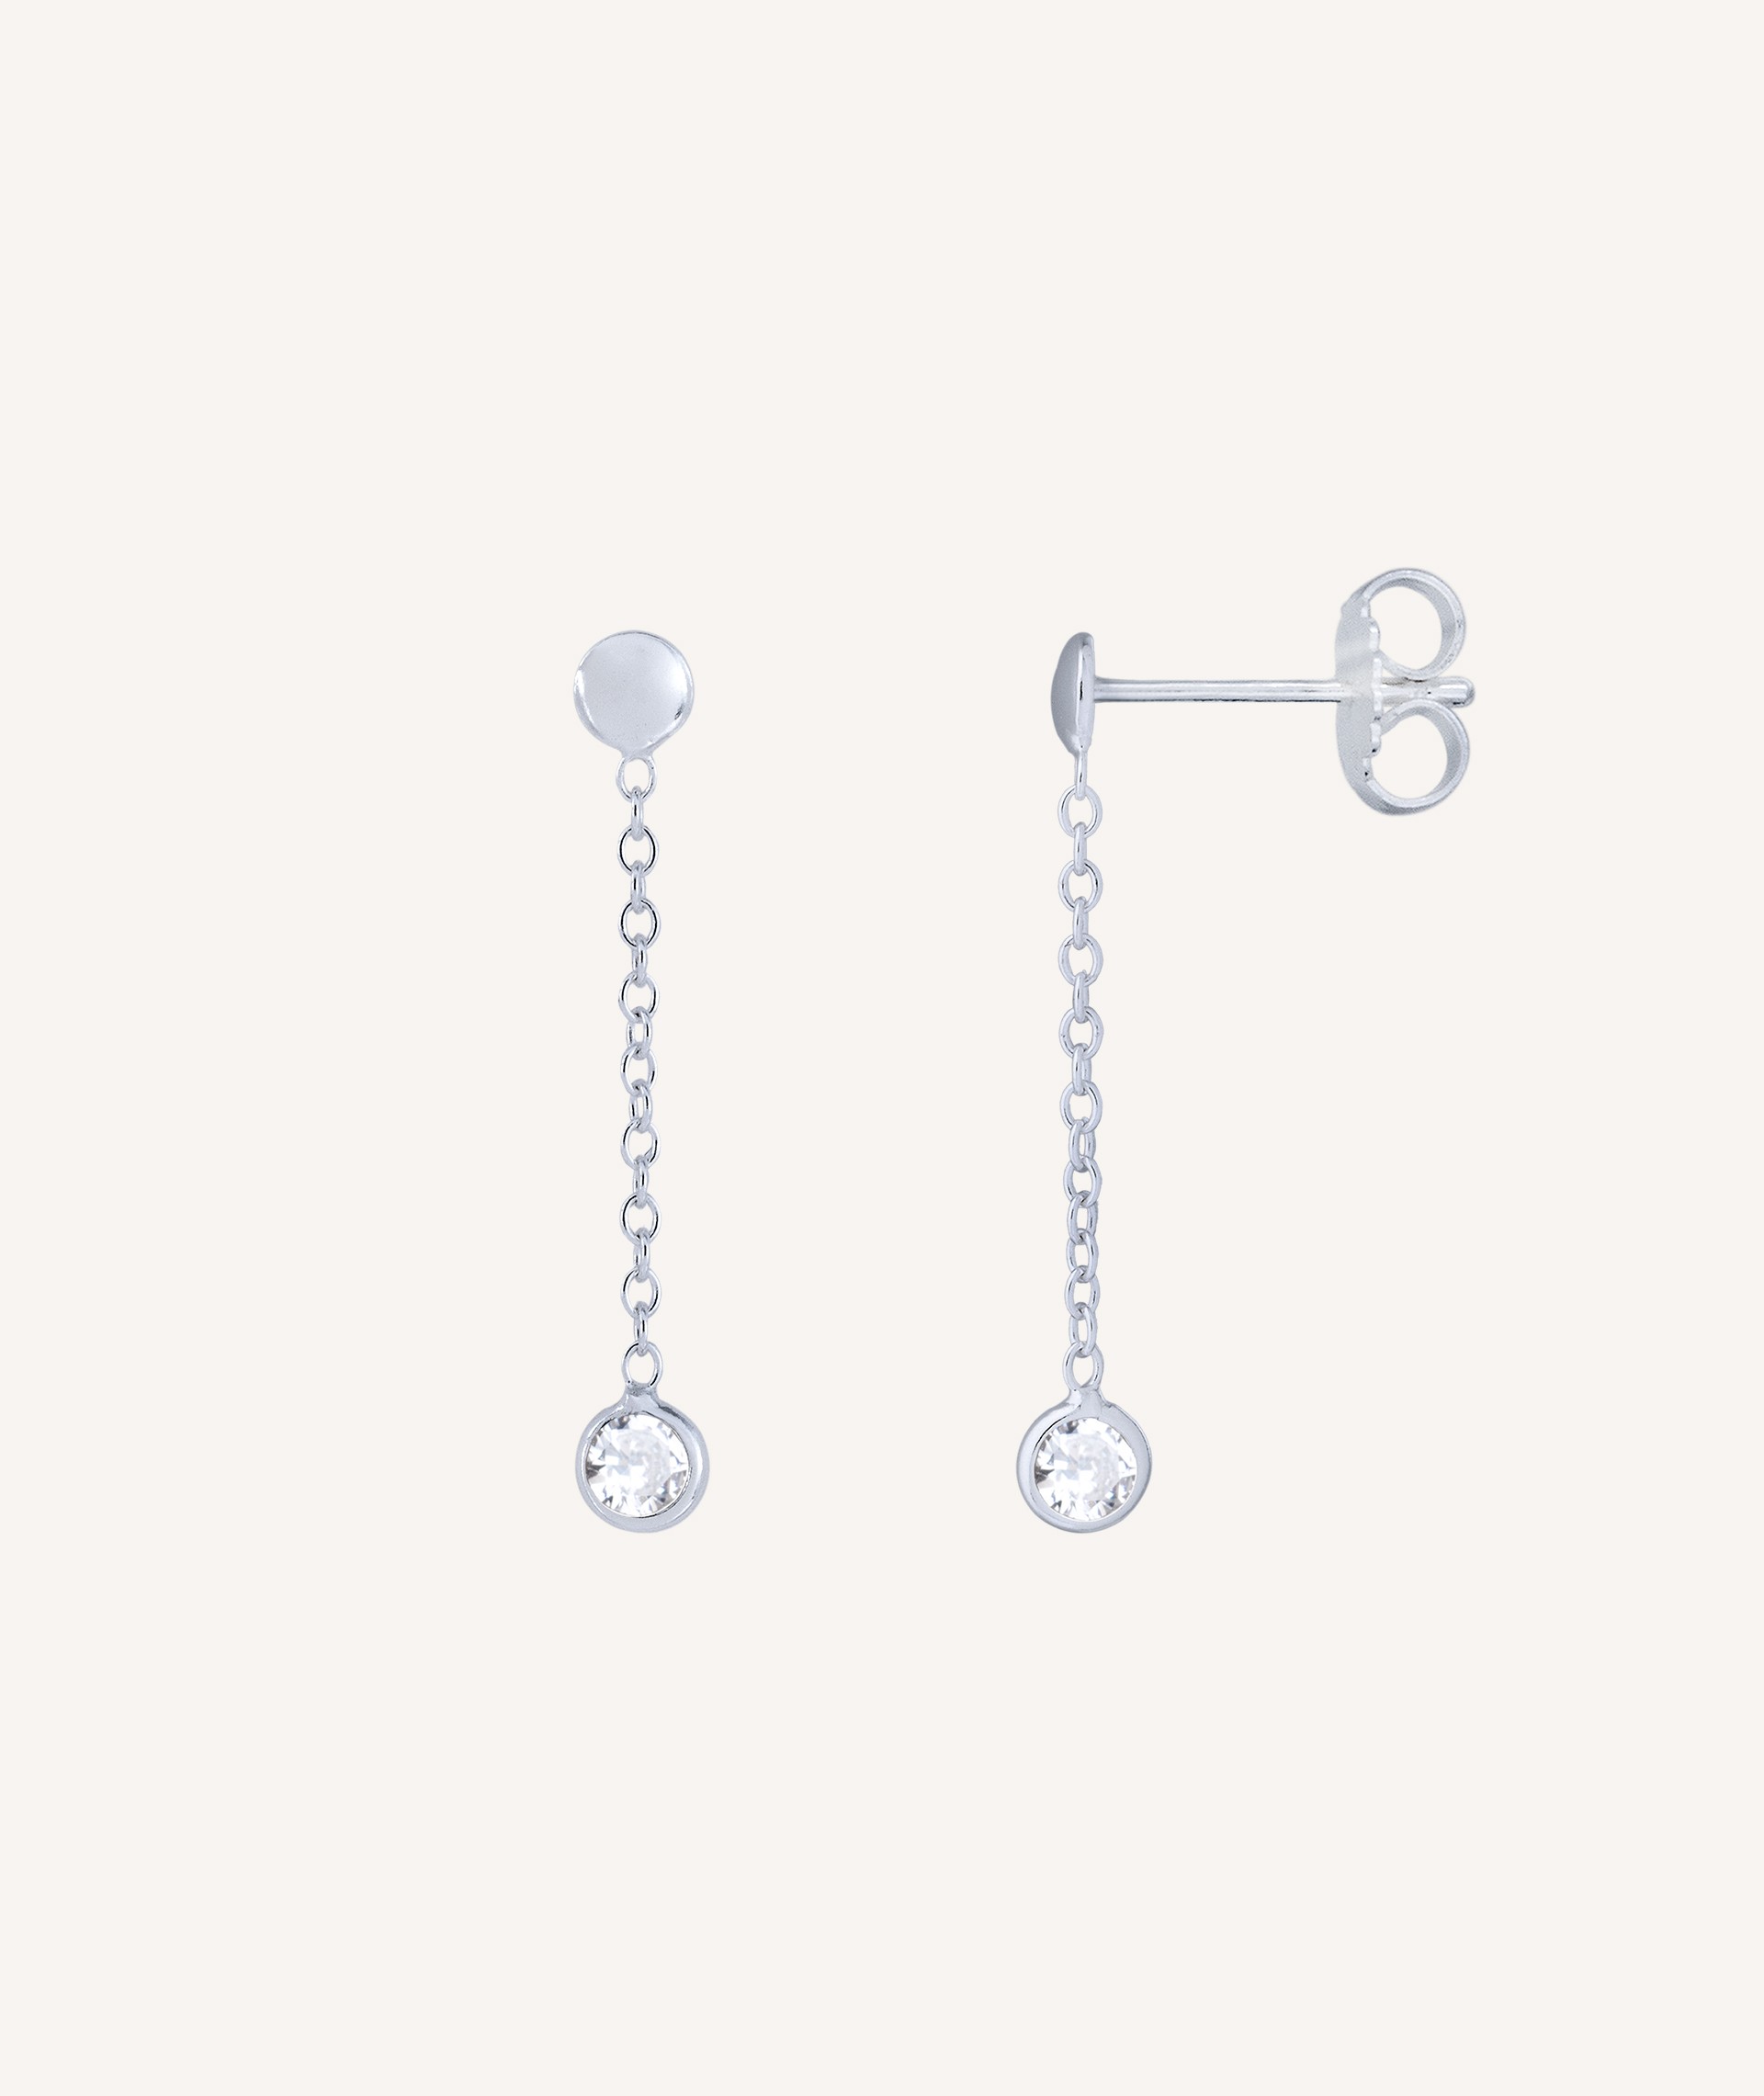 Earrings  silver 925 chain with zirconita